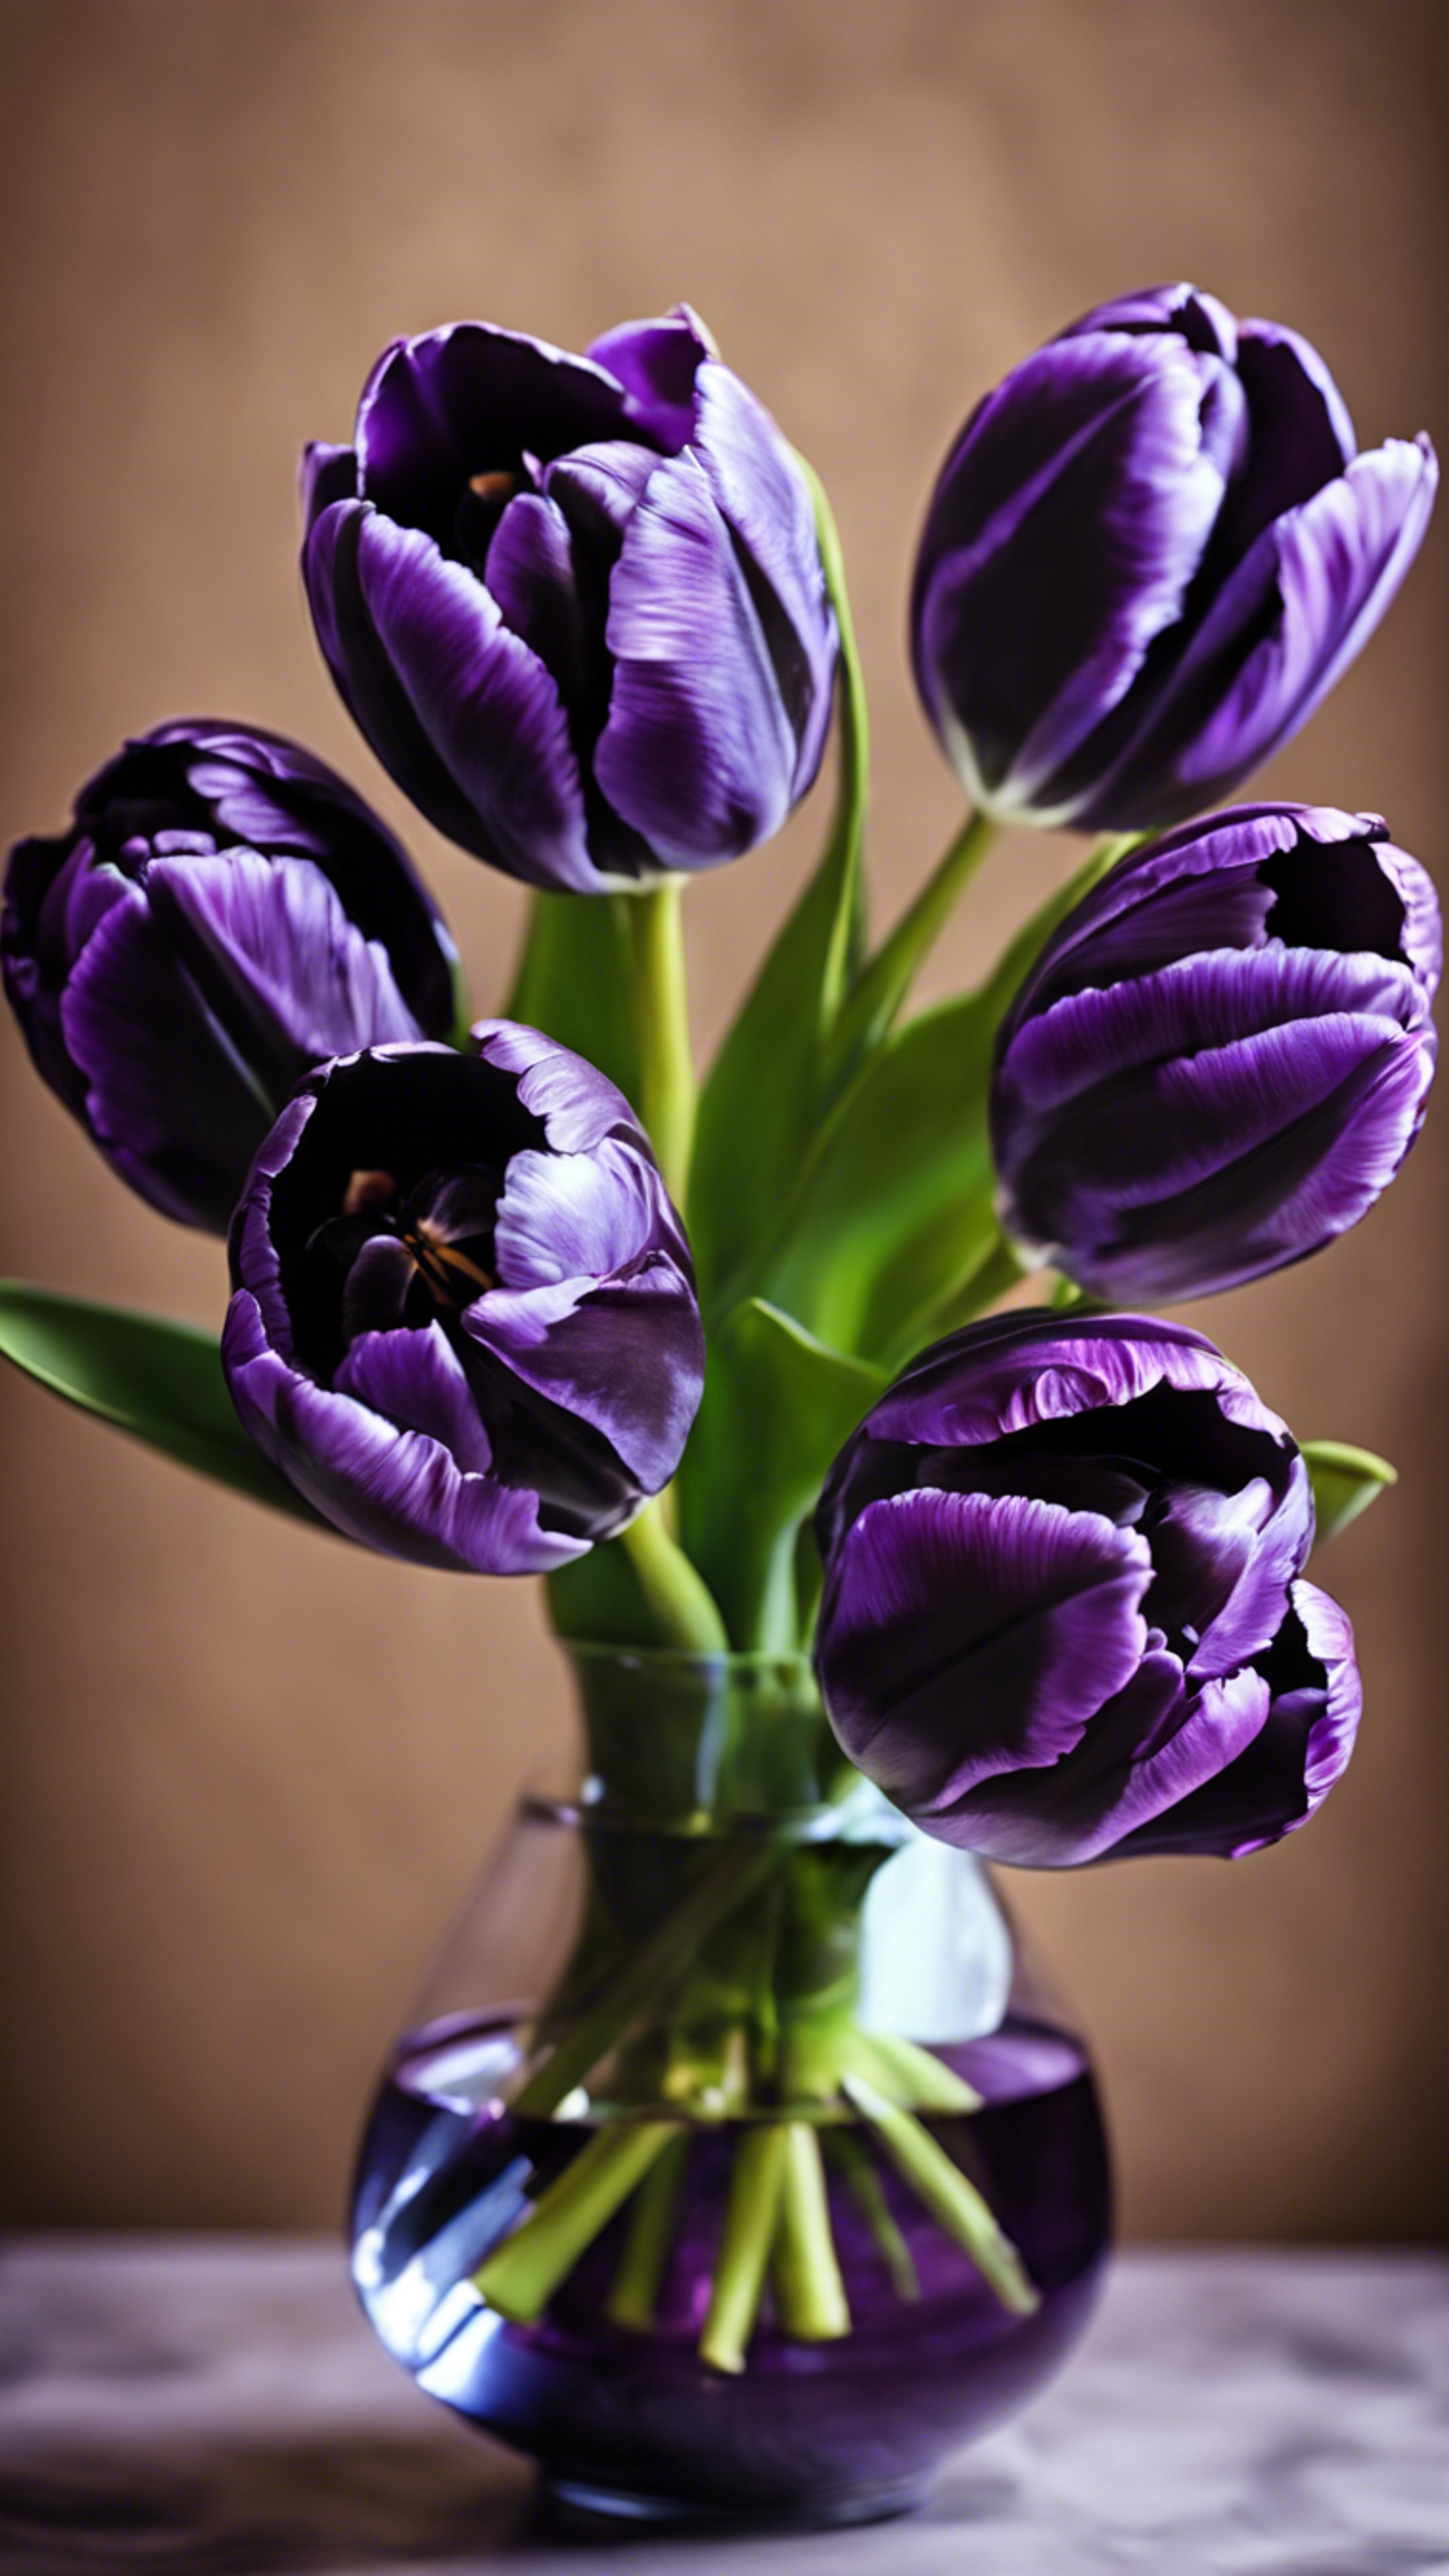 Black tulips with purple edges in full bloom in an elegant vase. Tapet[bf30bf151b944cb69afa]